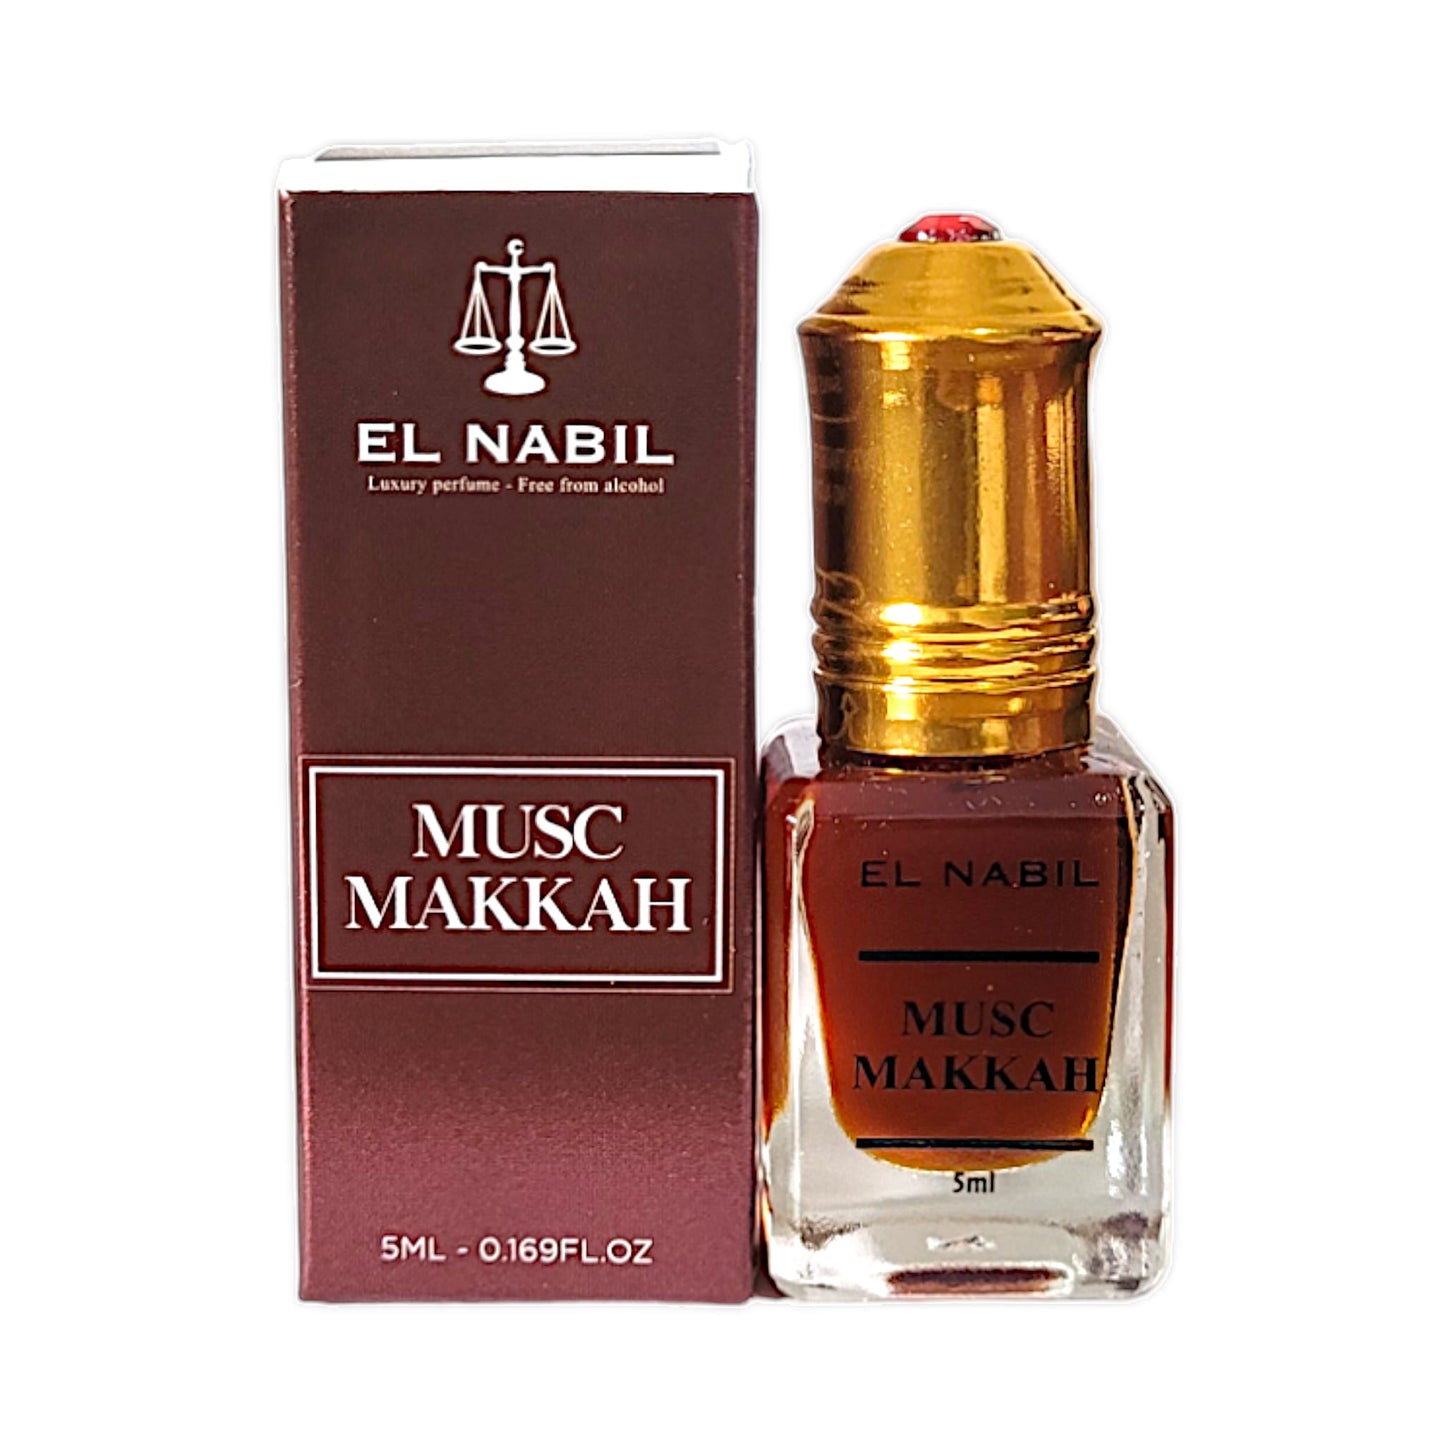 El Nabil Musc Makkah Parfümöl mit Roll-On-Applikator 5 ml (Kopie)